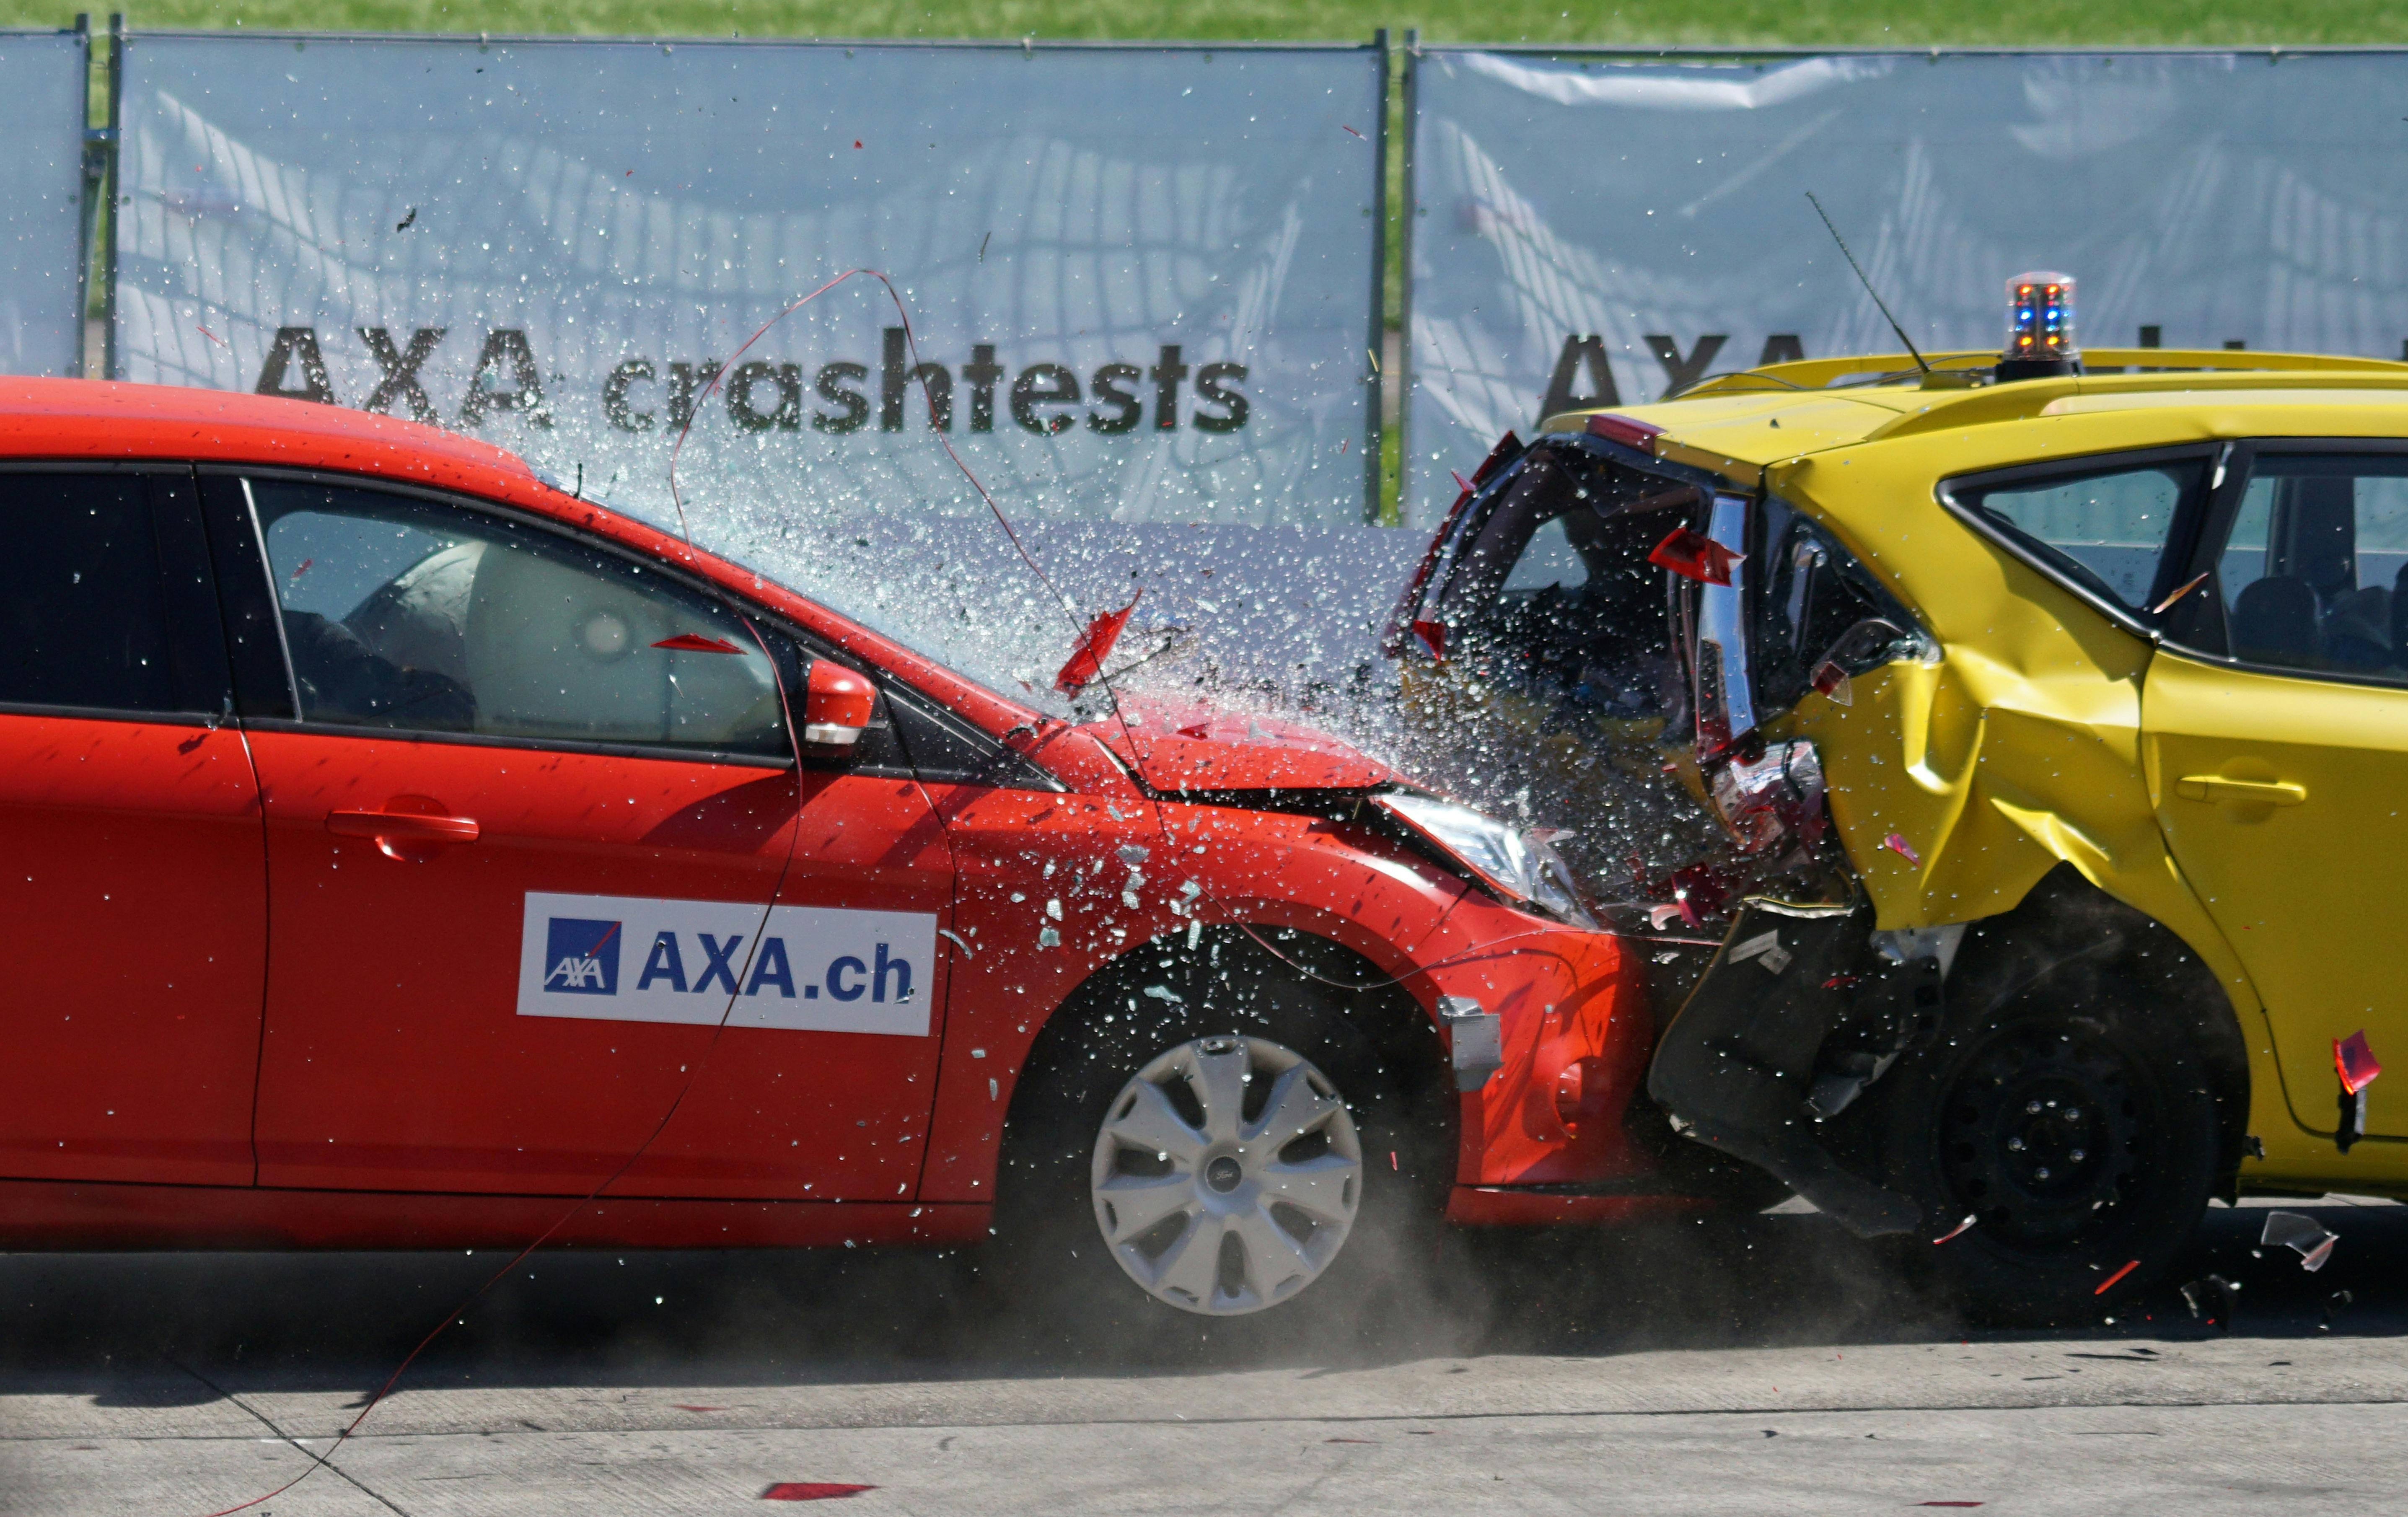 319,240 Car Accident Images, Stock Photos, 3D objects, & Vectors